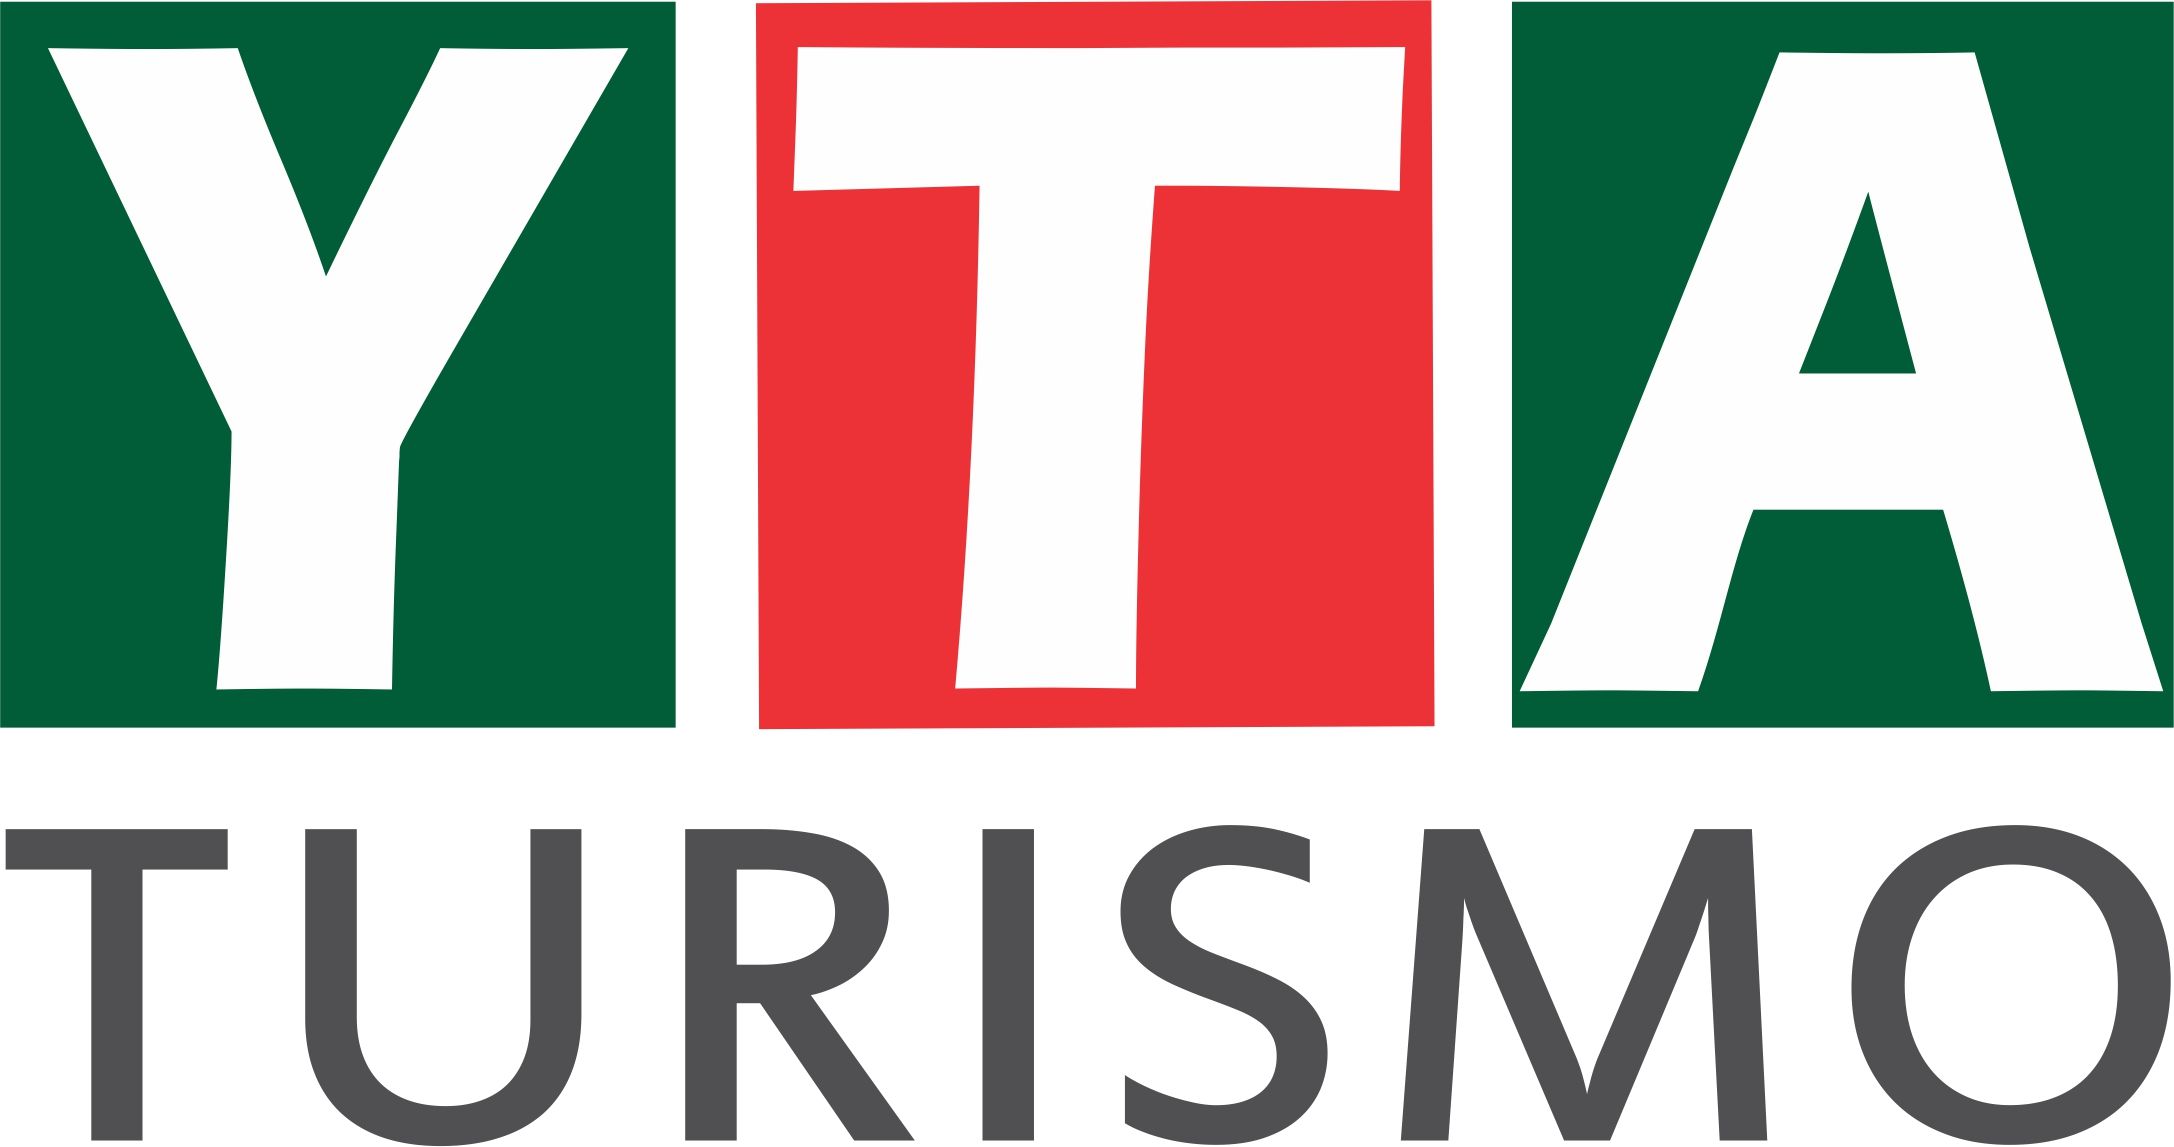 YTA Turismo